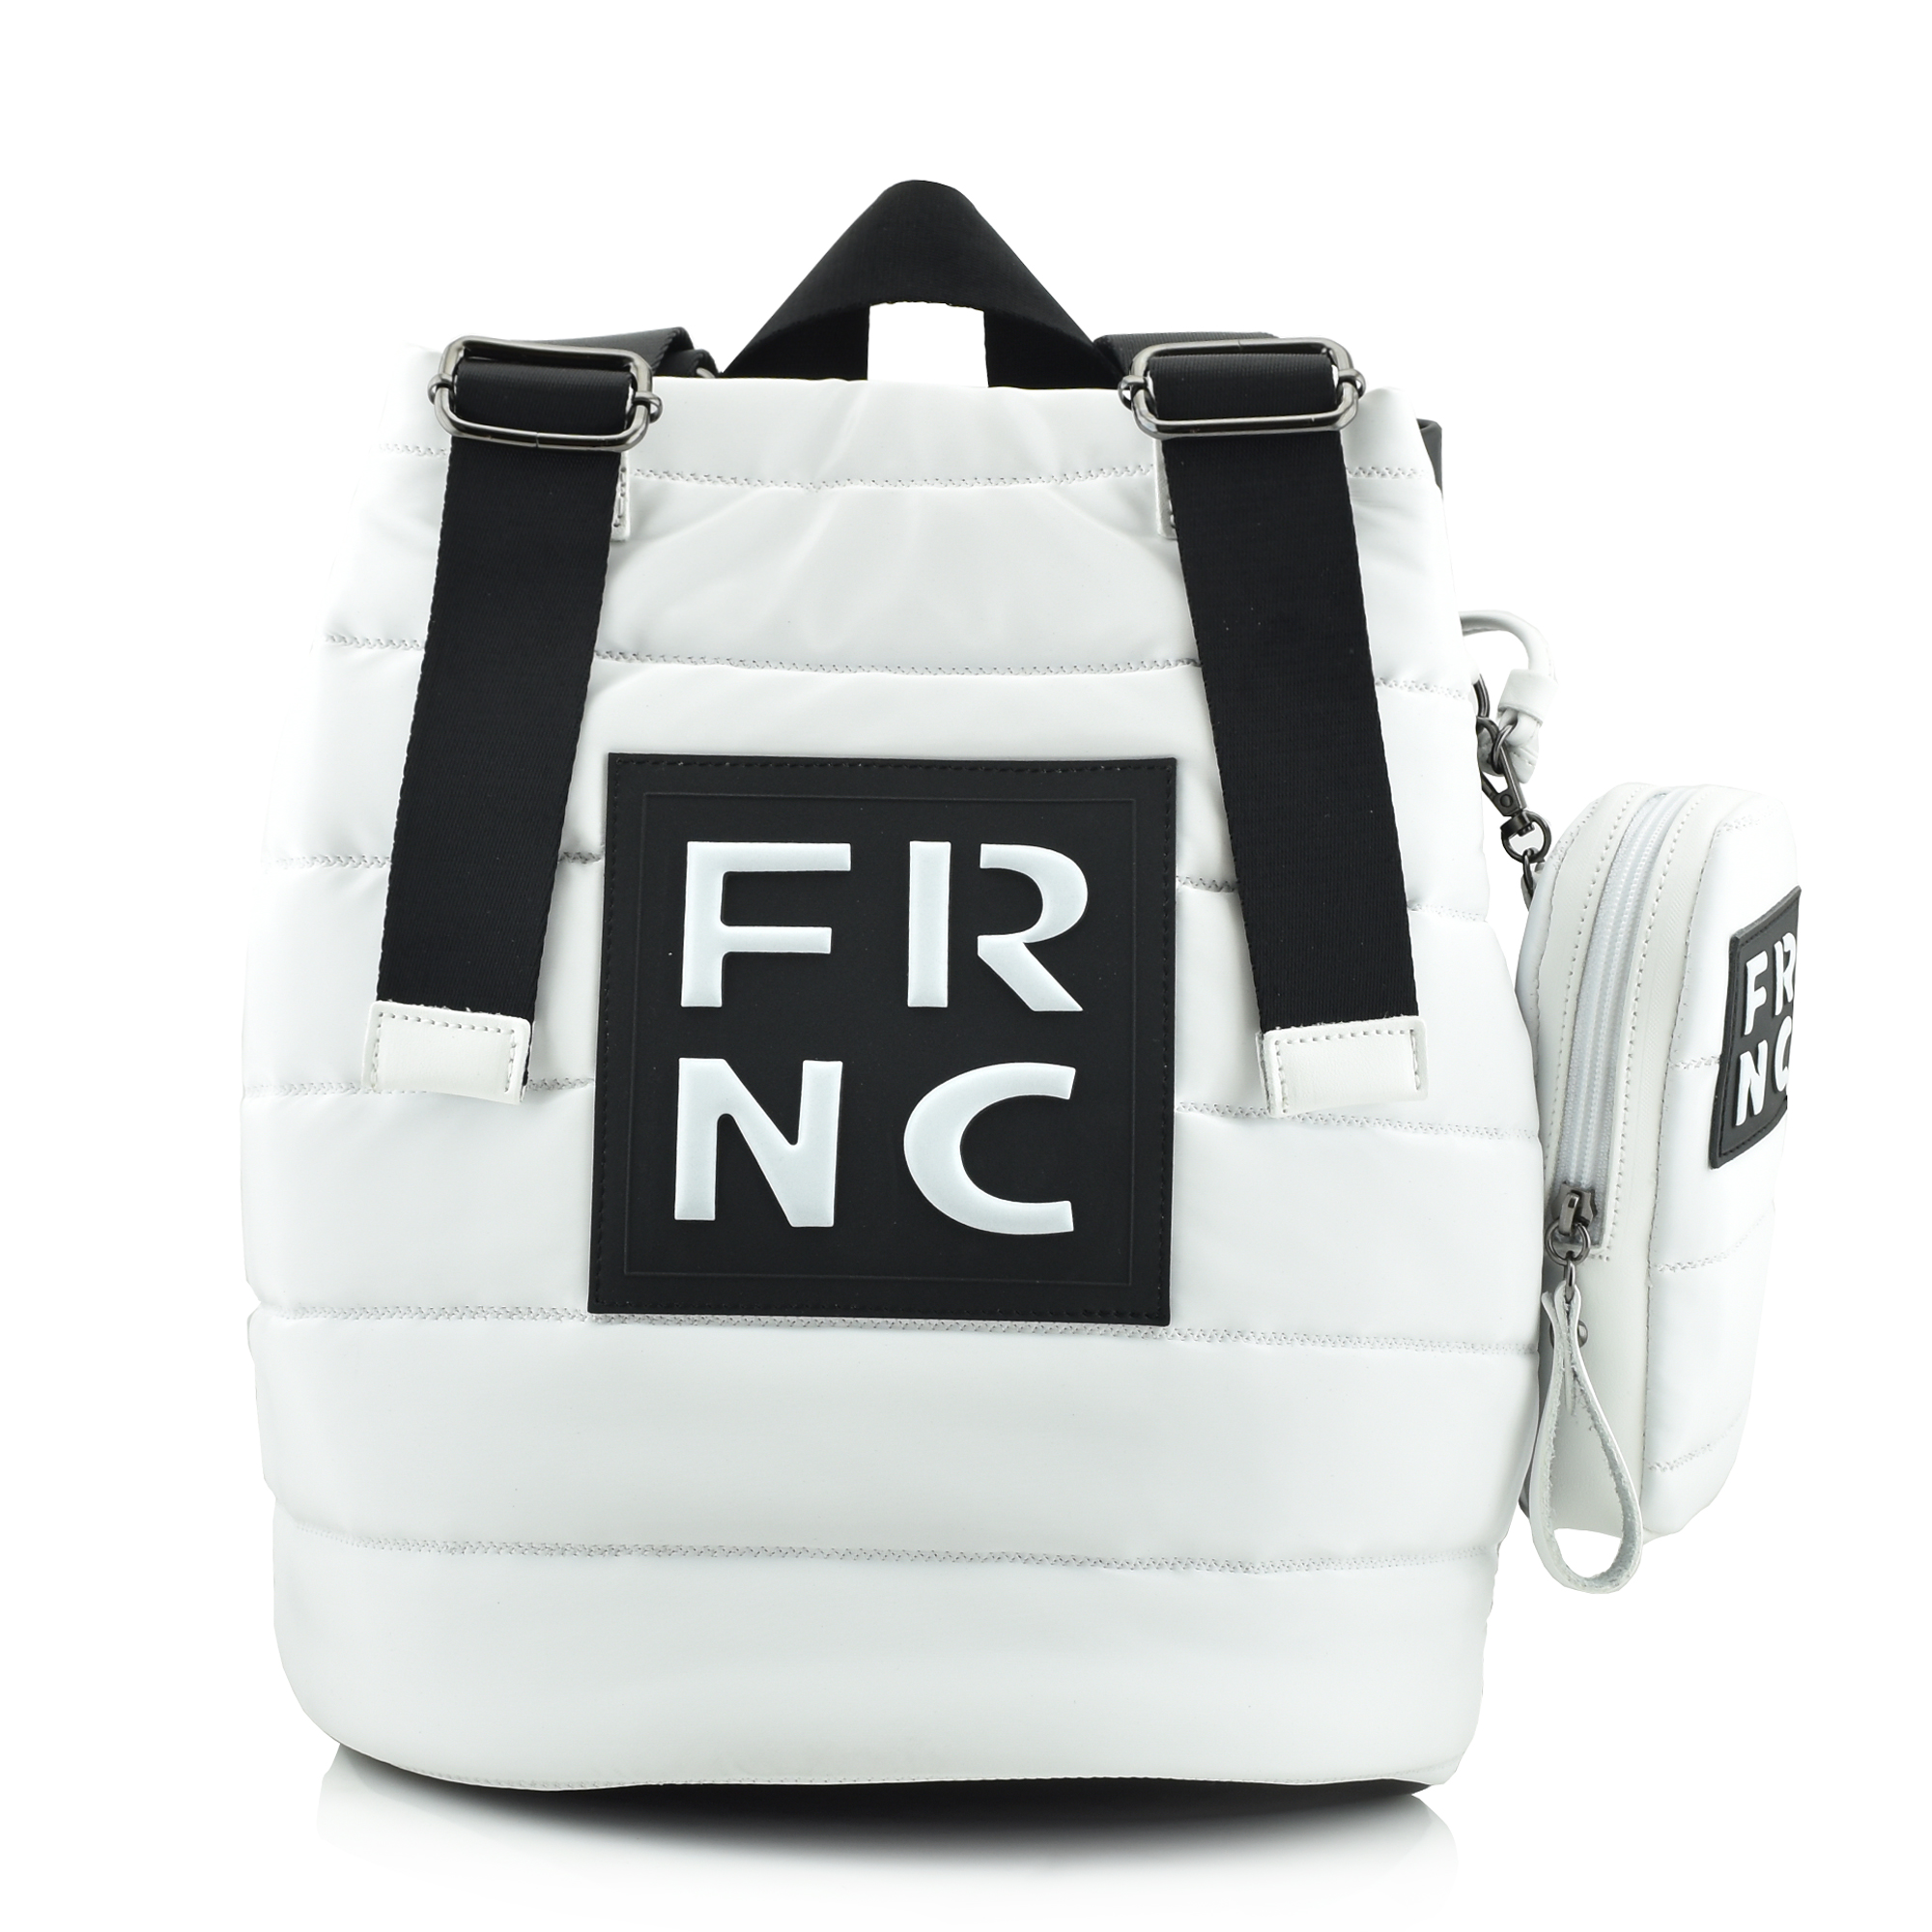 FRNC - FRANCESCO BIG SHINY BACKPACK - 2300 WHITE